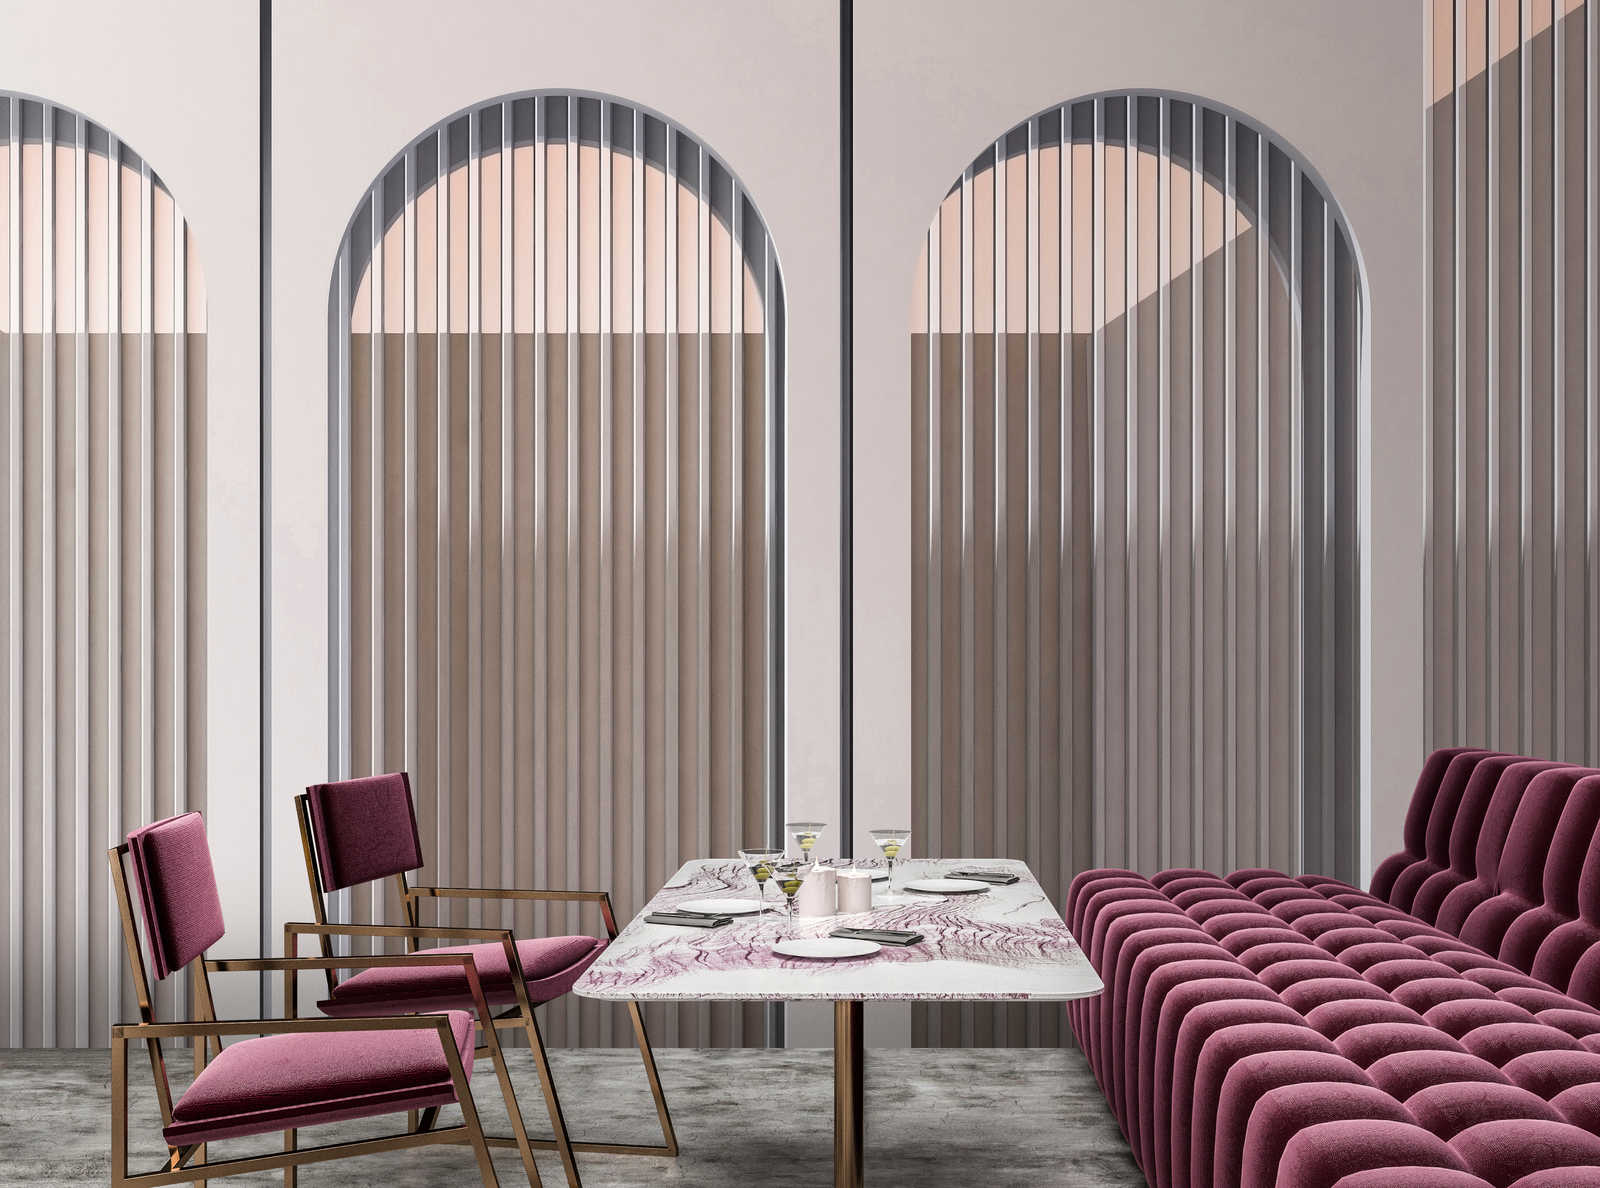             Escape Room 2 - Papel Pintado Arquitectura Moderna Arco Redondo Gris y Rosa
        